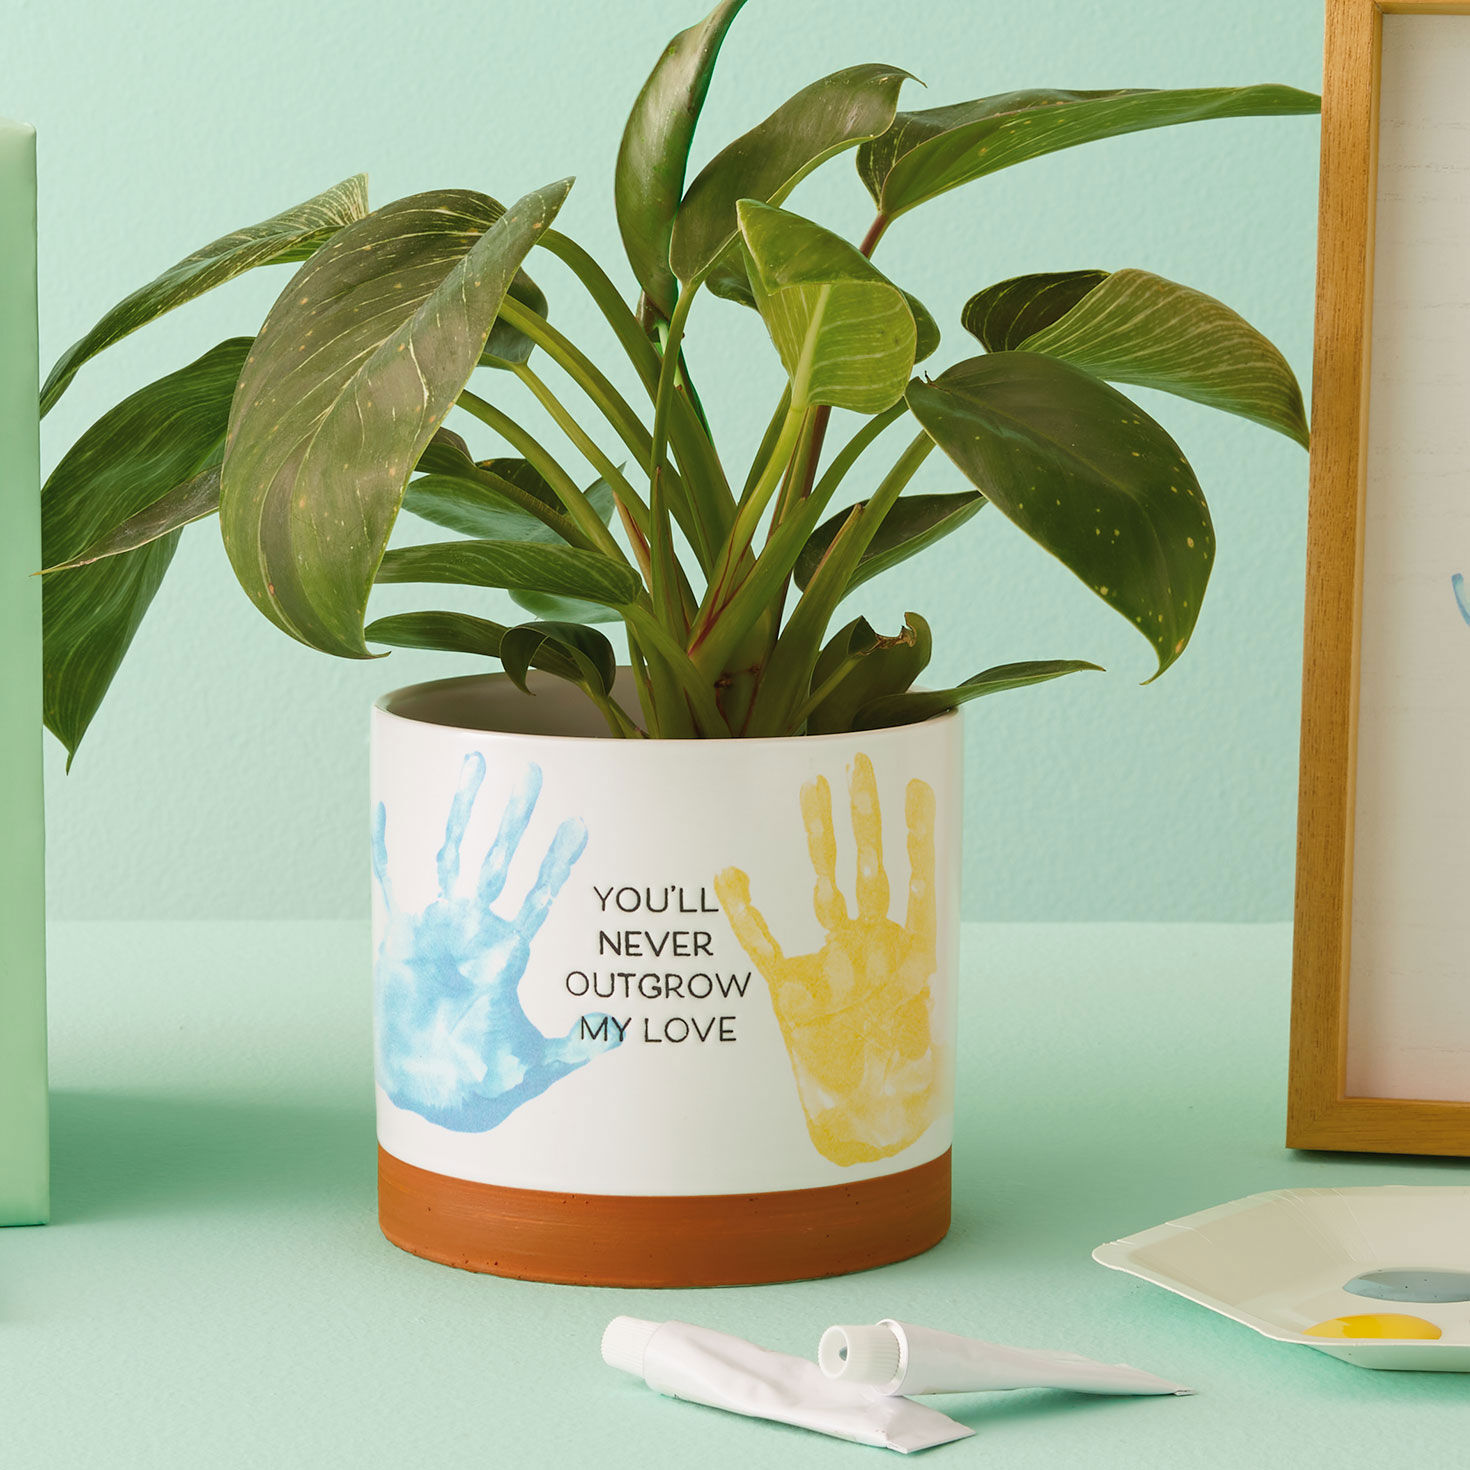 Never Outgrow My Love Planter Handprint Kit for only USD 24.99 | Hallmark